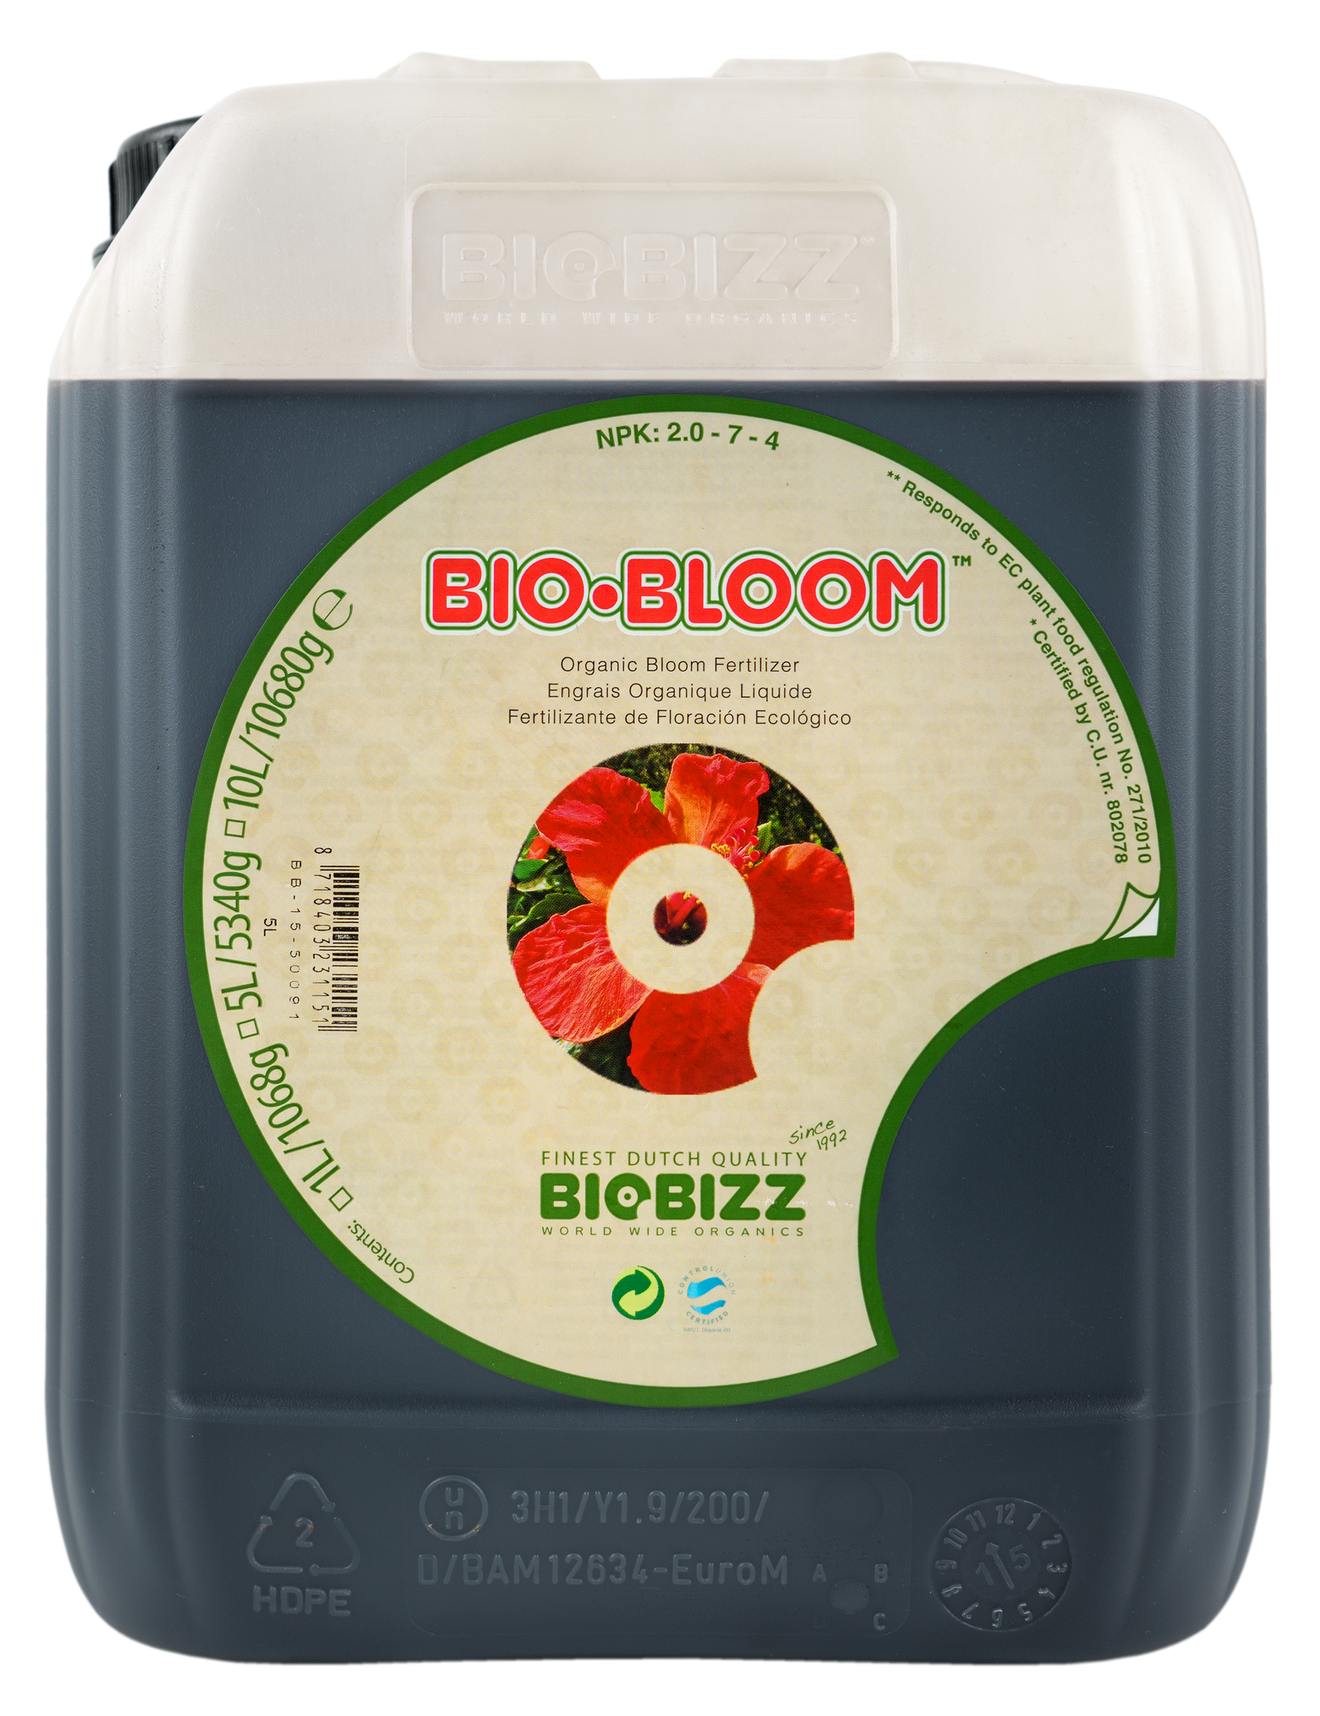 BioBizz BIO-BLOOM Blühdünger 5L